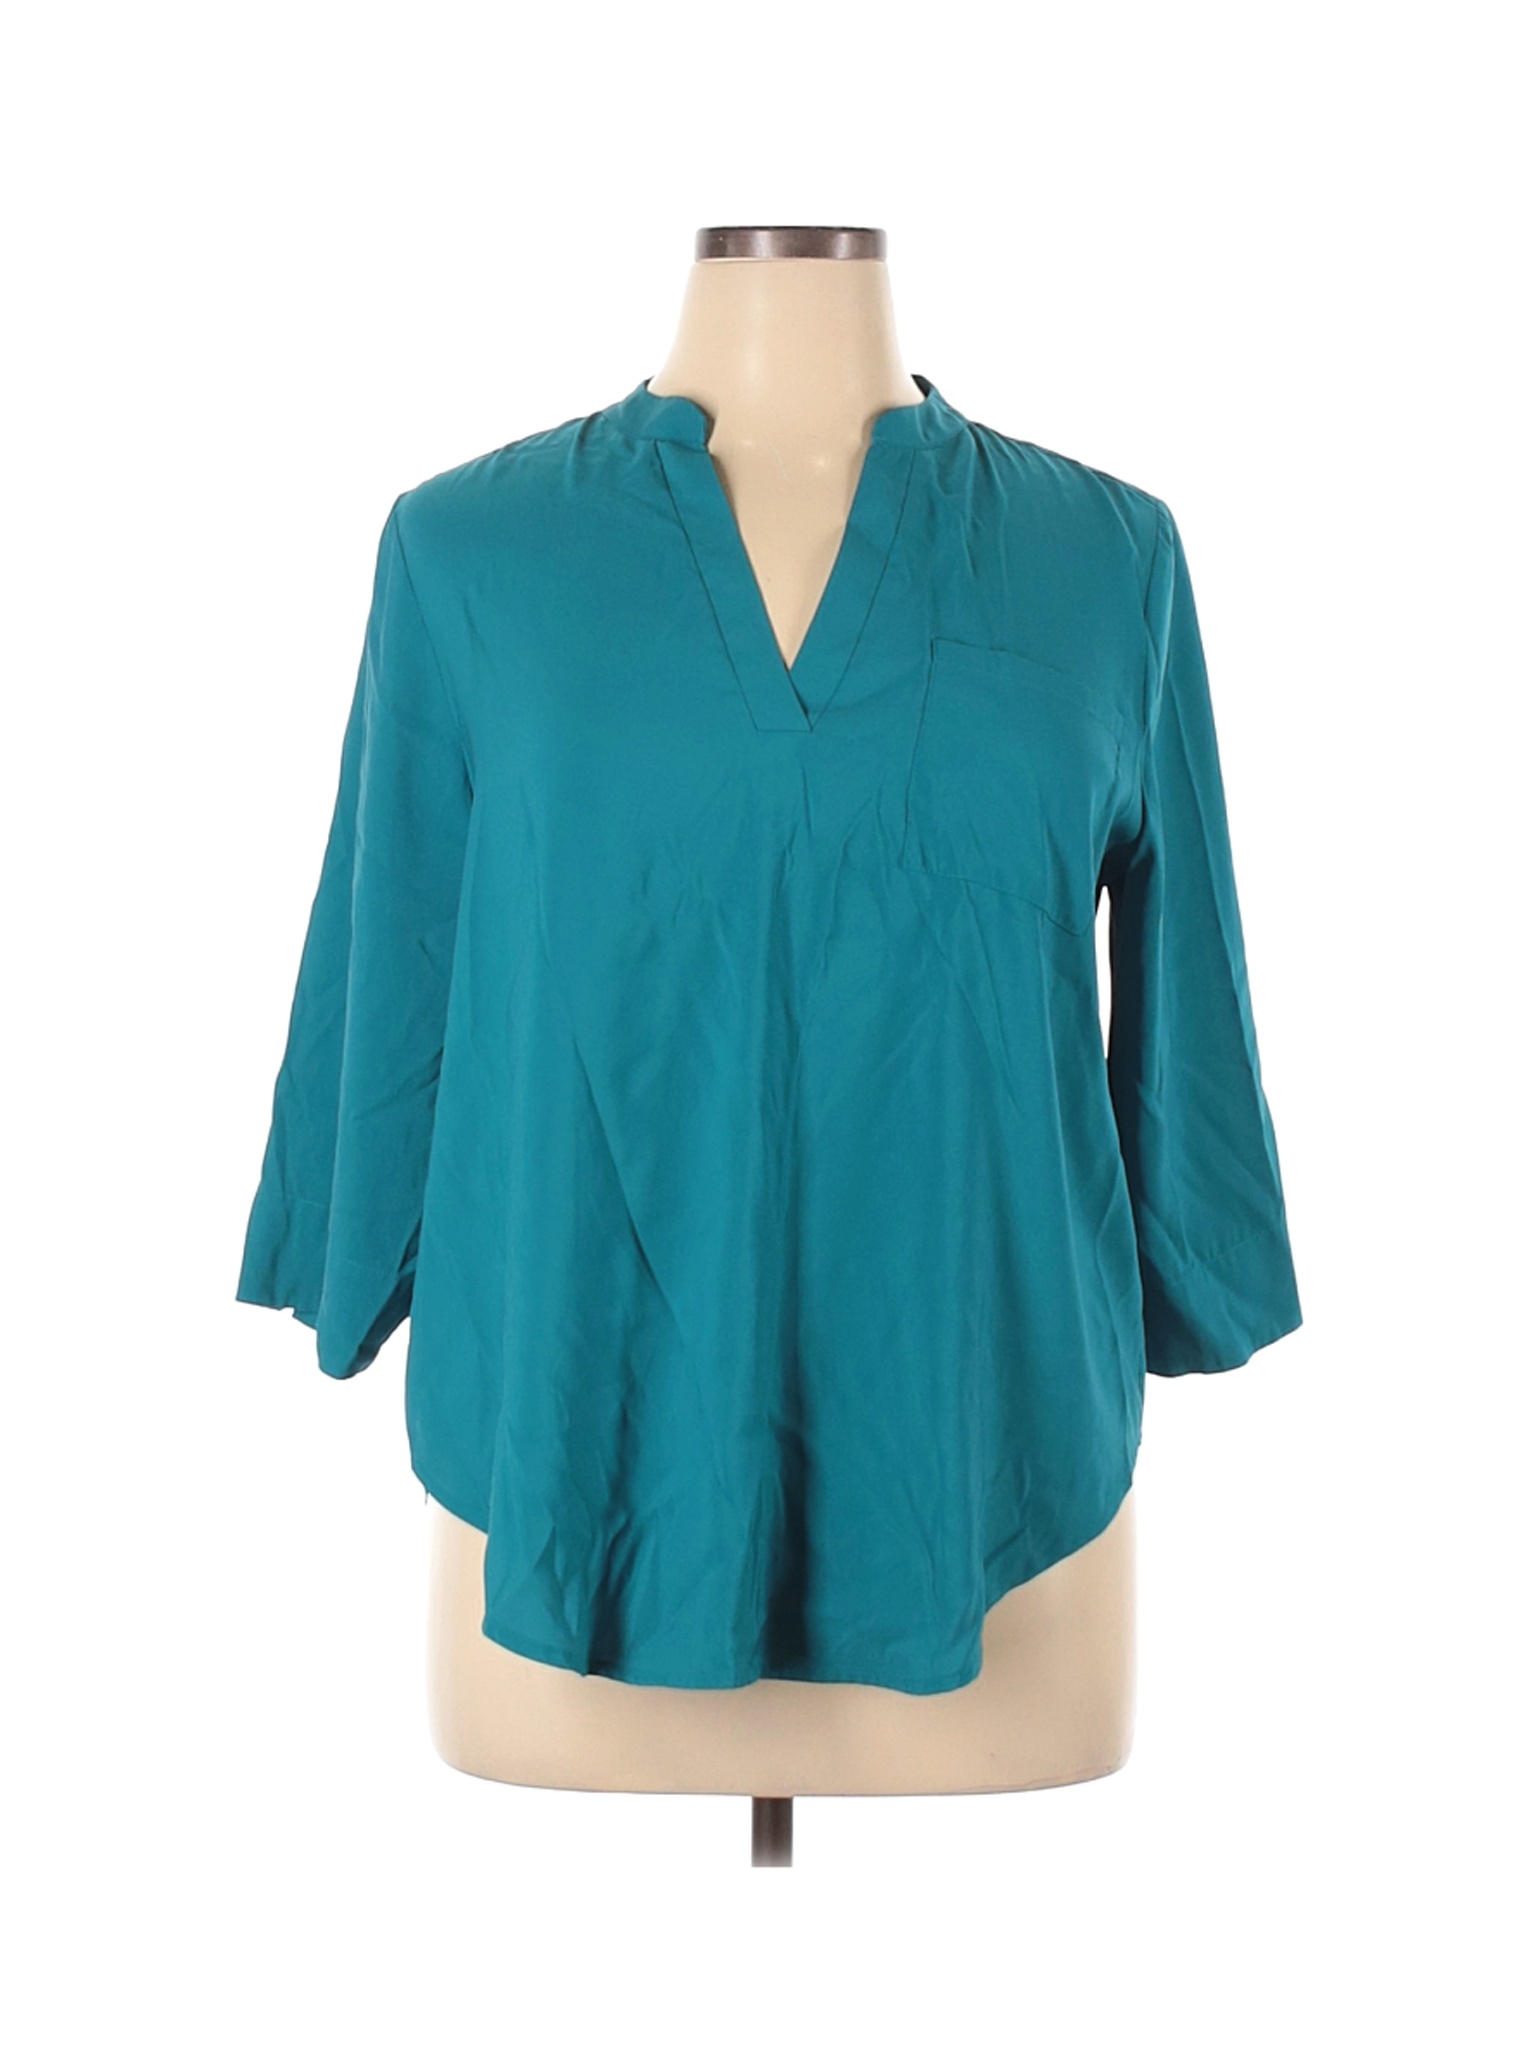 Coldwater Creek Women Green 3/4 Sleeve Blouse XL Petites | eBay